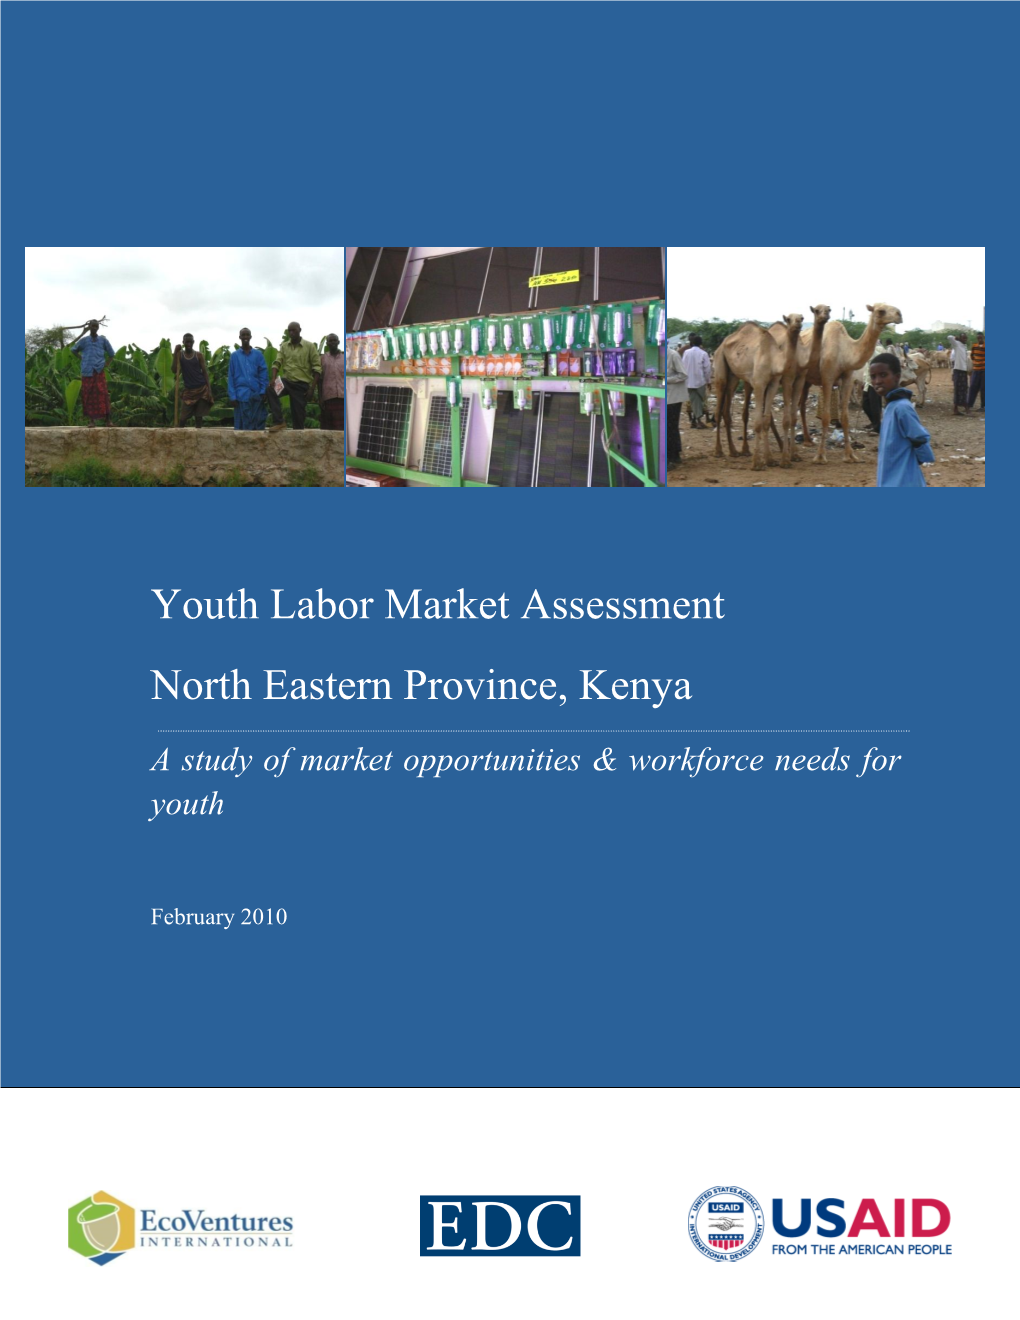 Youth Labor Market Assessment North Eastern Province, Kenya